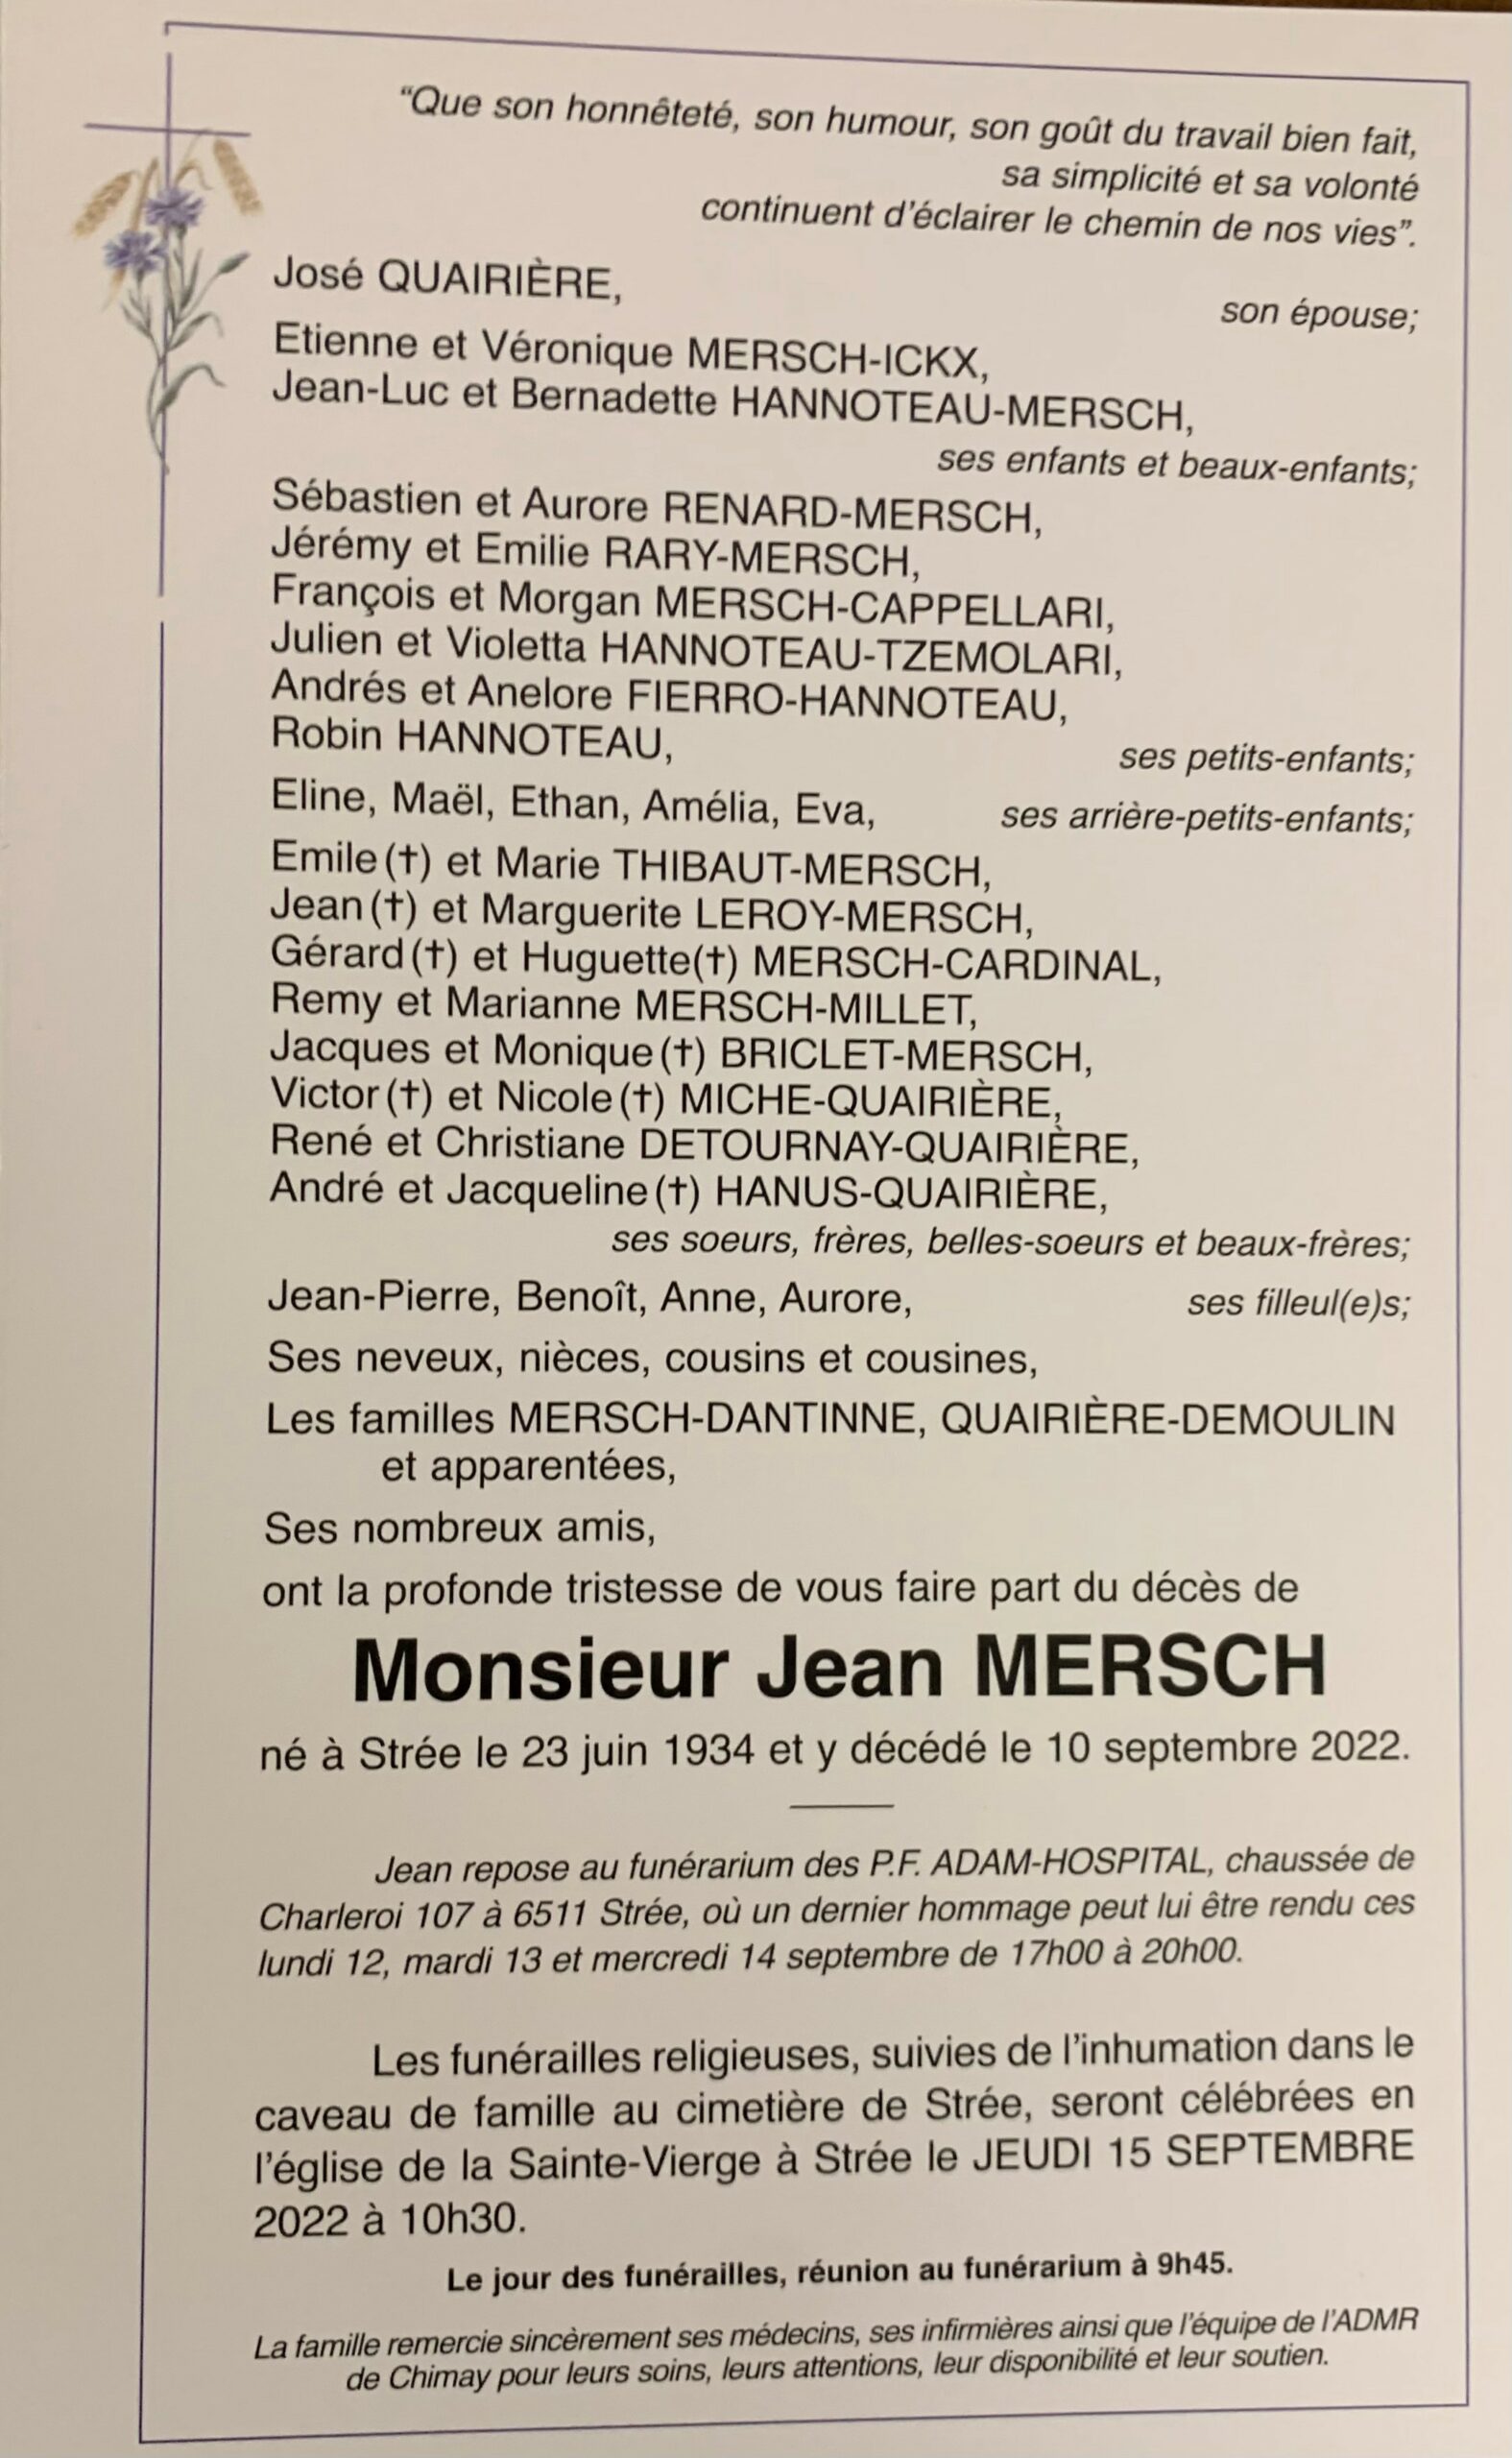 Monsieur Jean Mersch scaled | Funérailles Adam Hospital